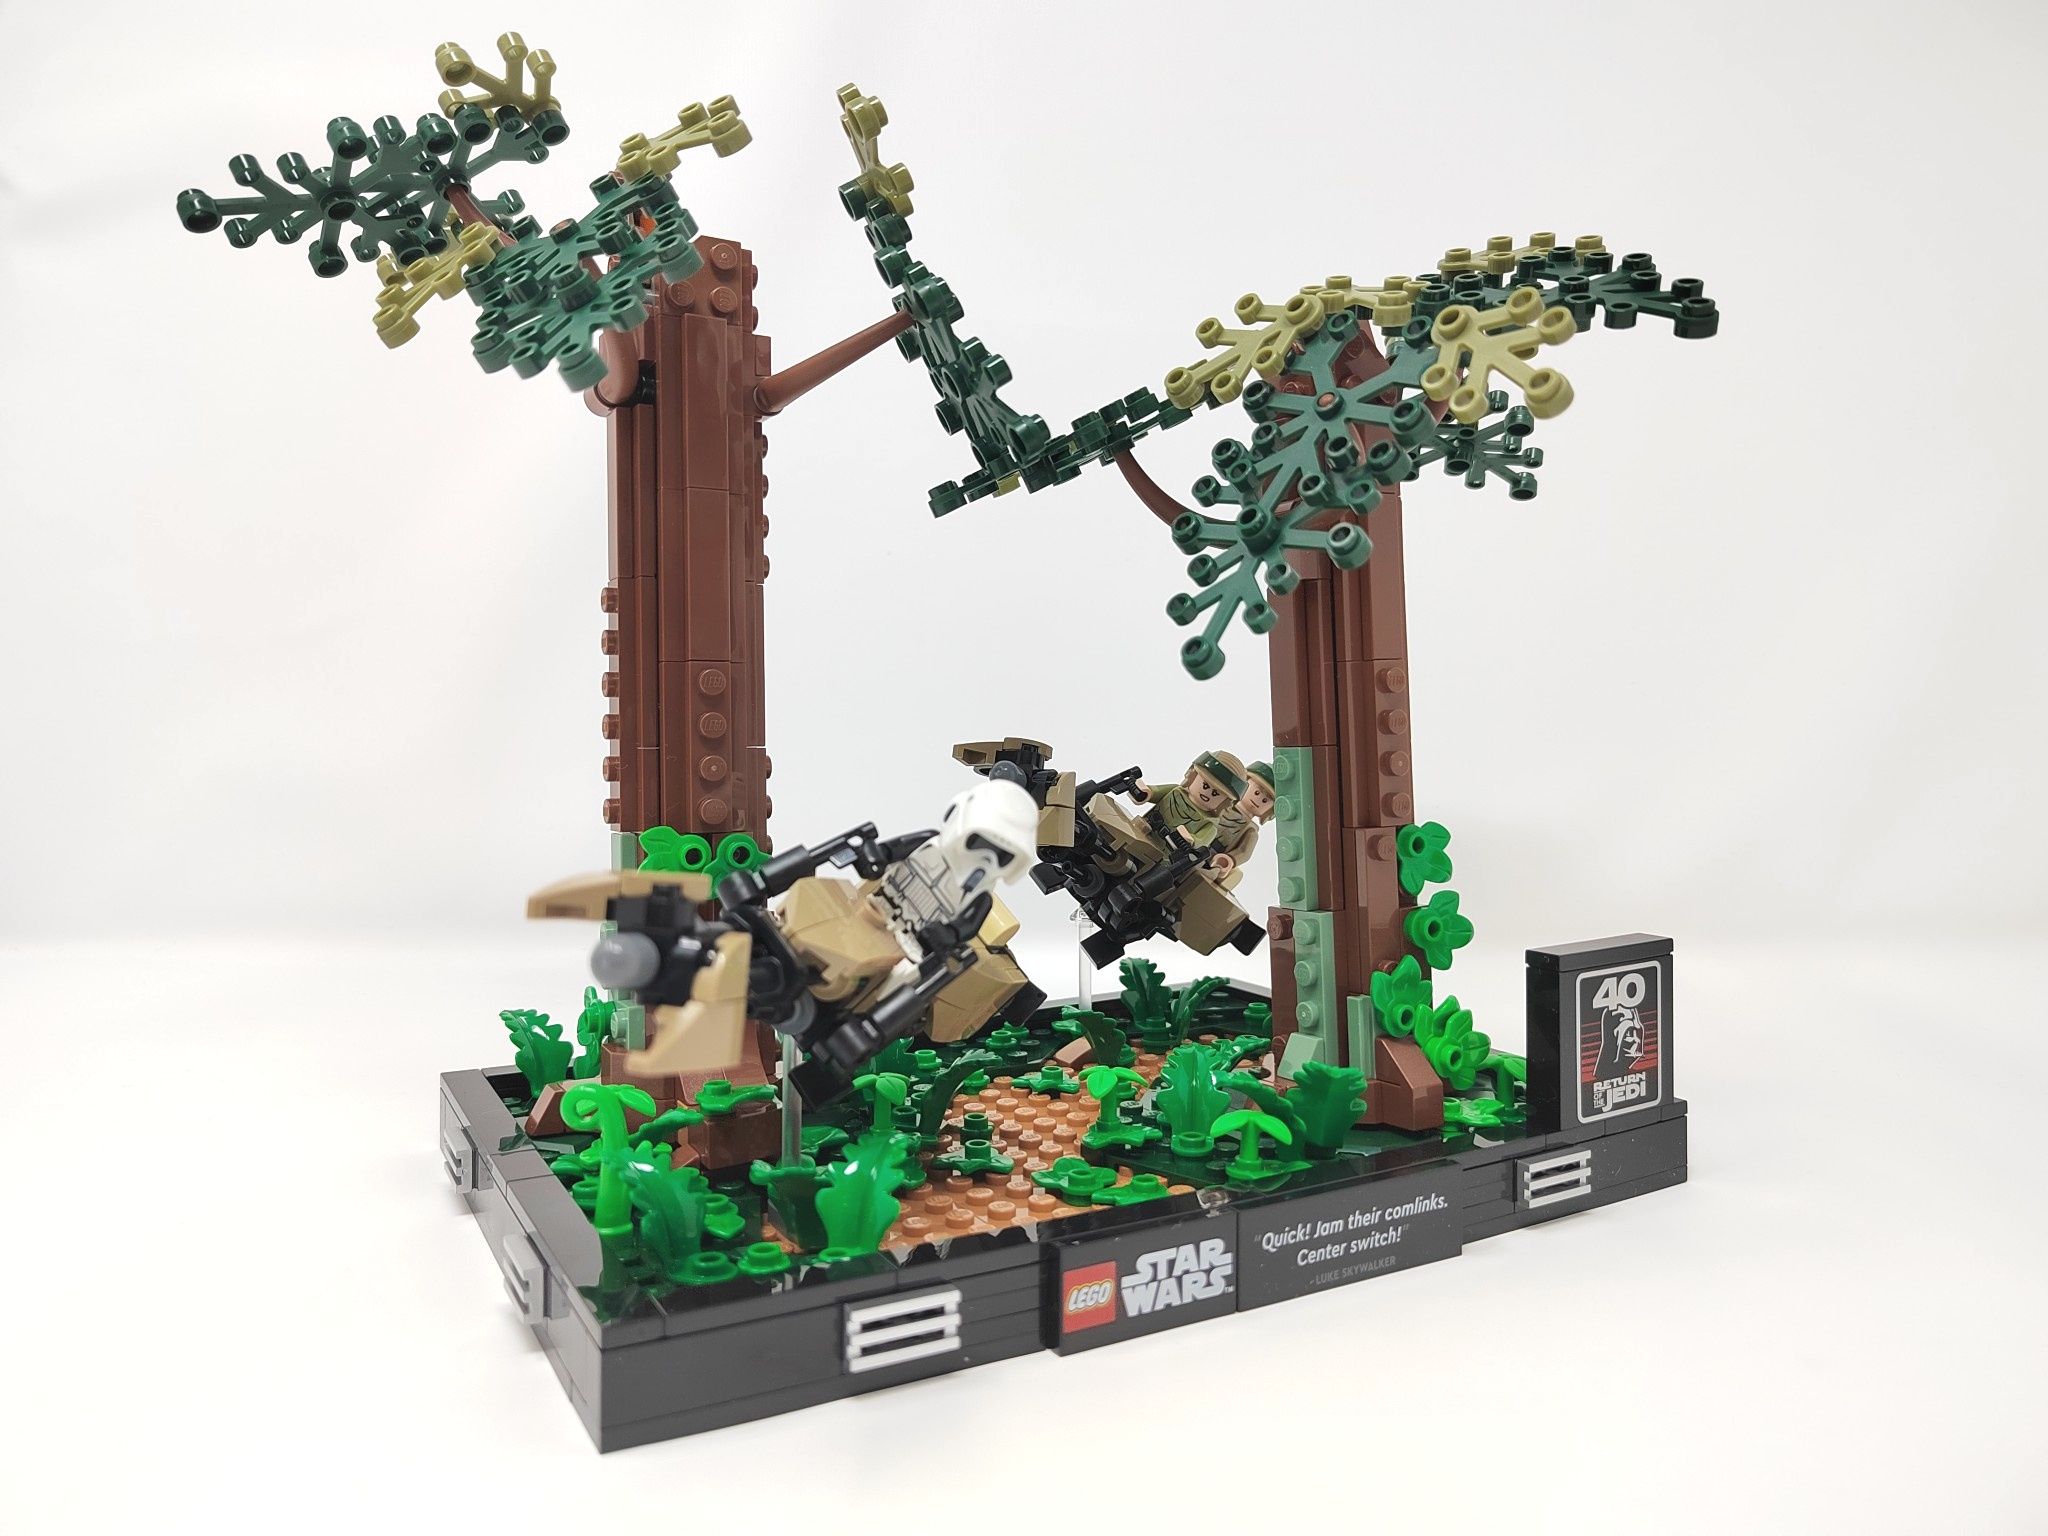 Recensione LEGO Star Wars - Diorama Inseguimento con lo speeder su Endor  (75353) - Mattonito